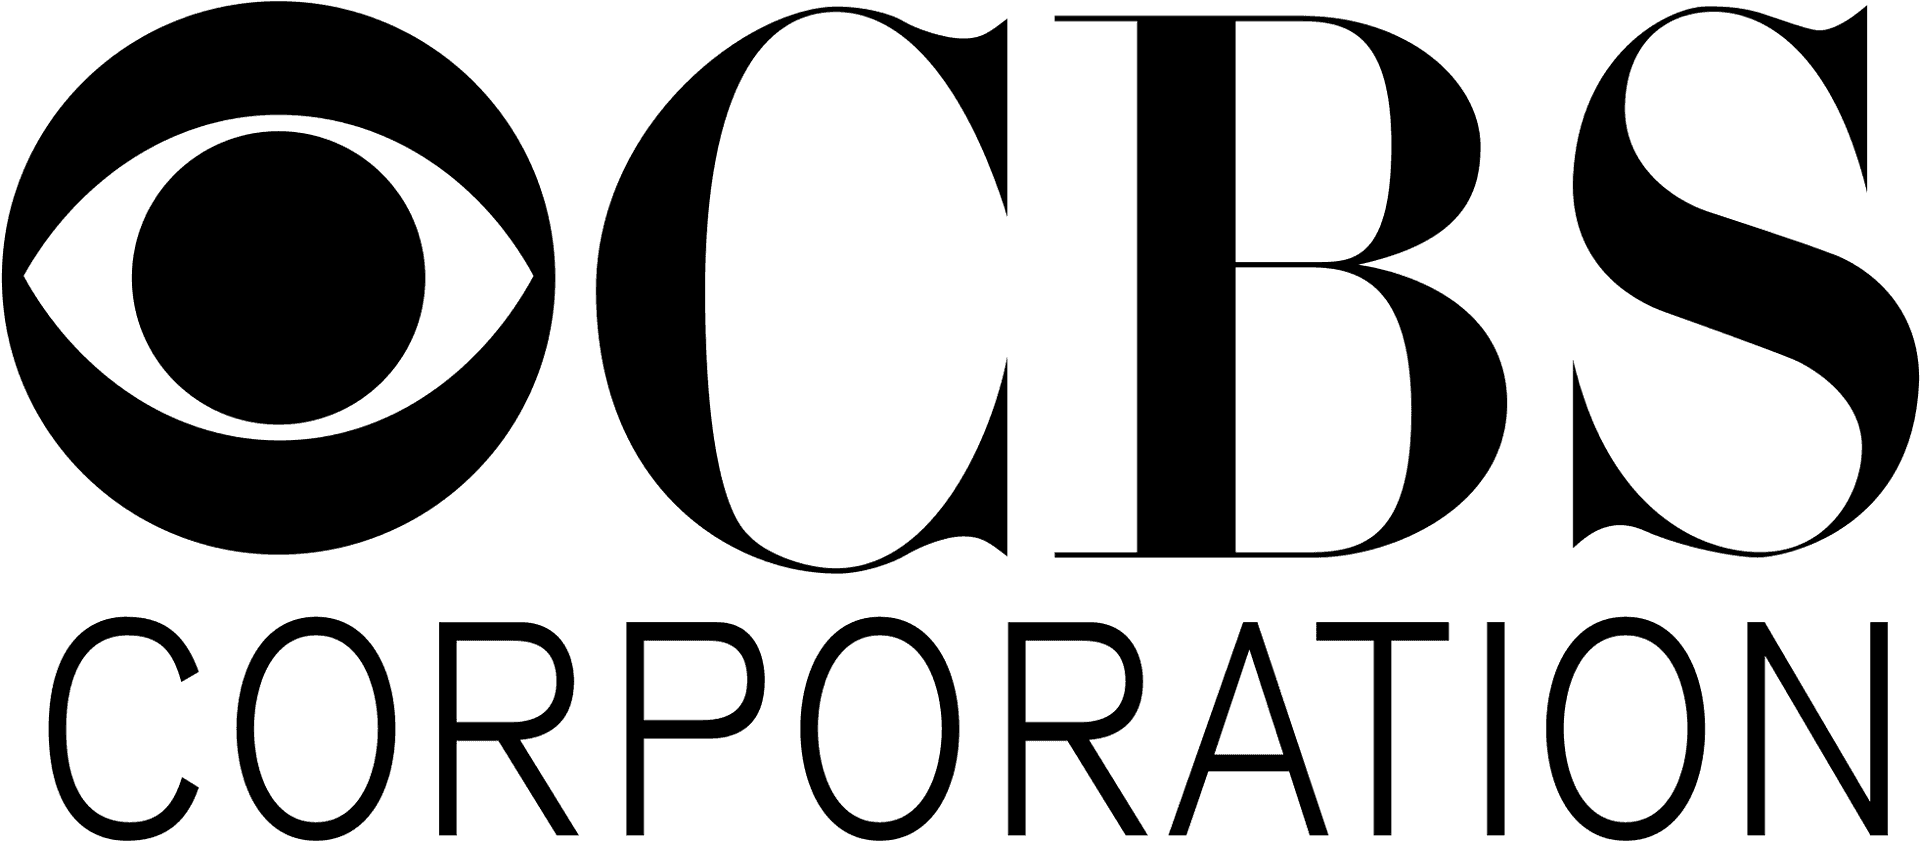 C B S_ Corporation_ Logo PNG